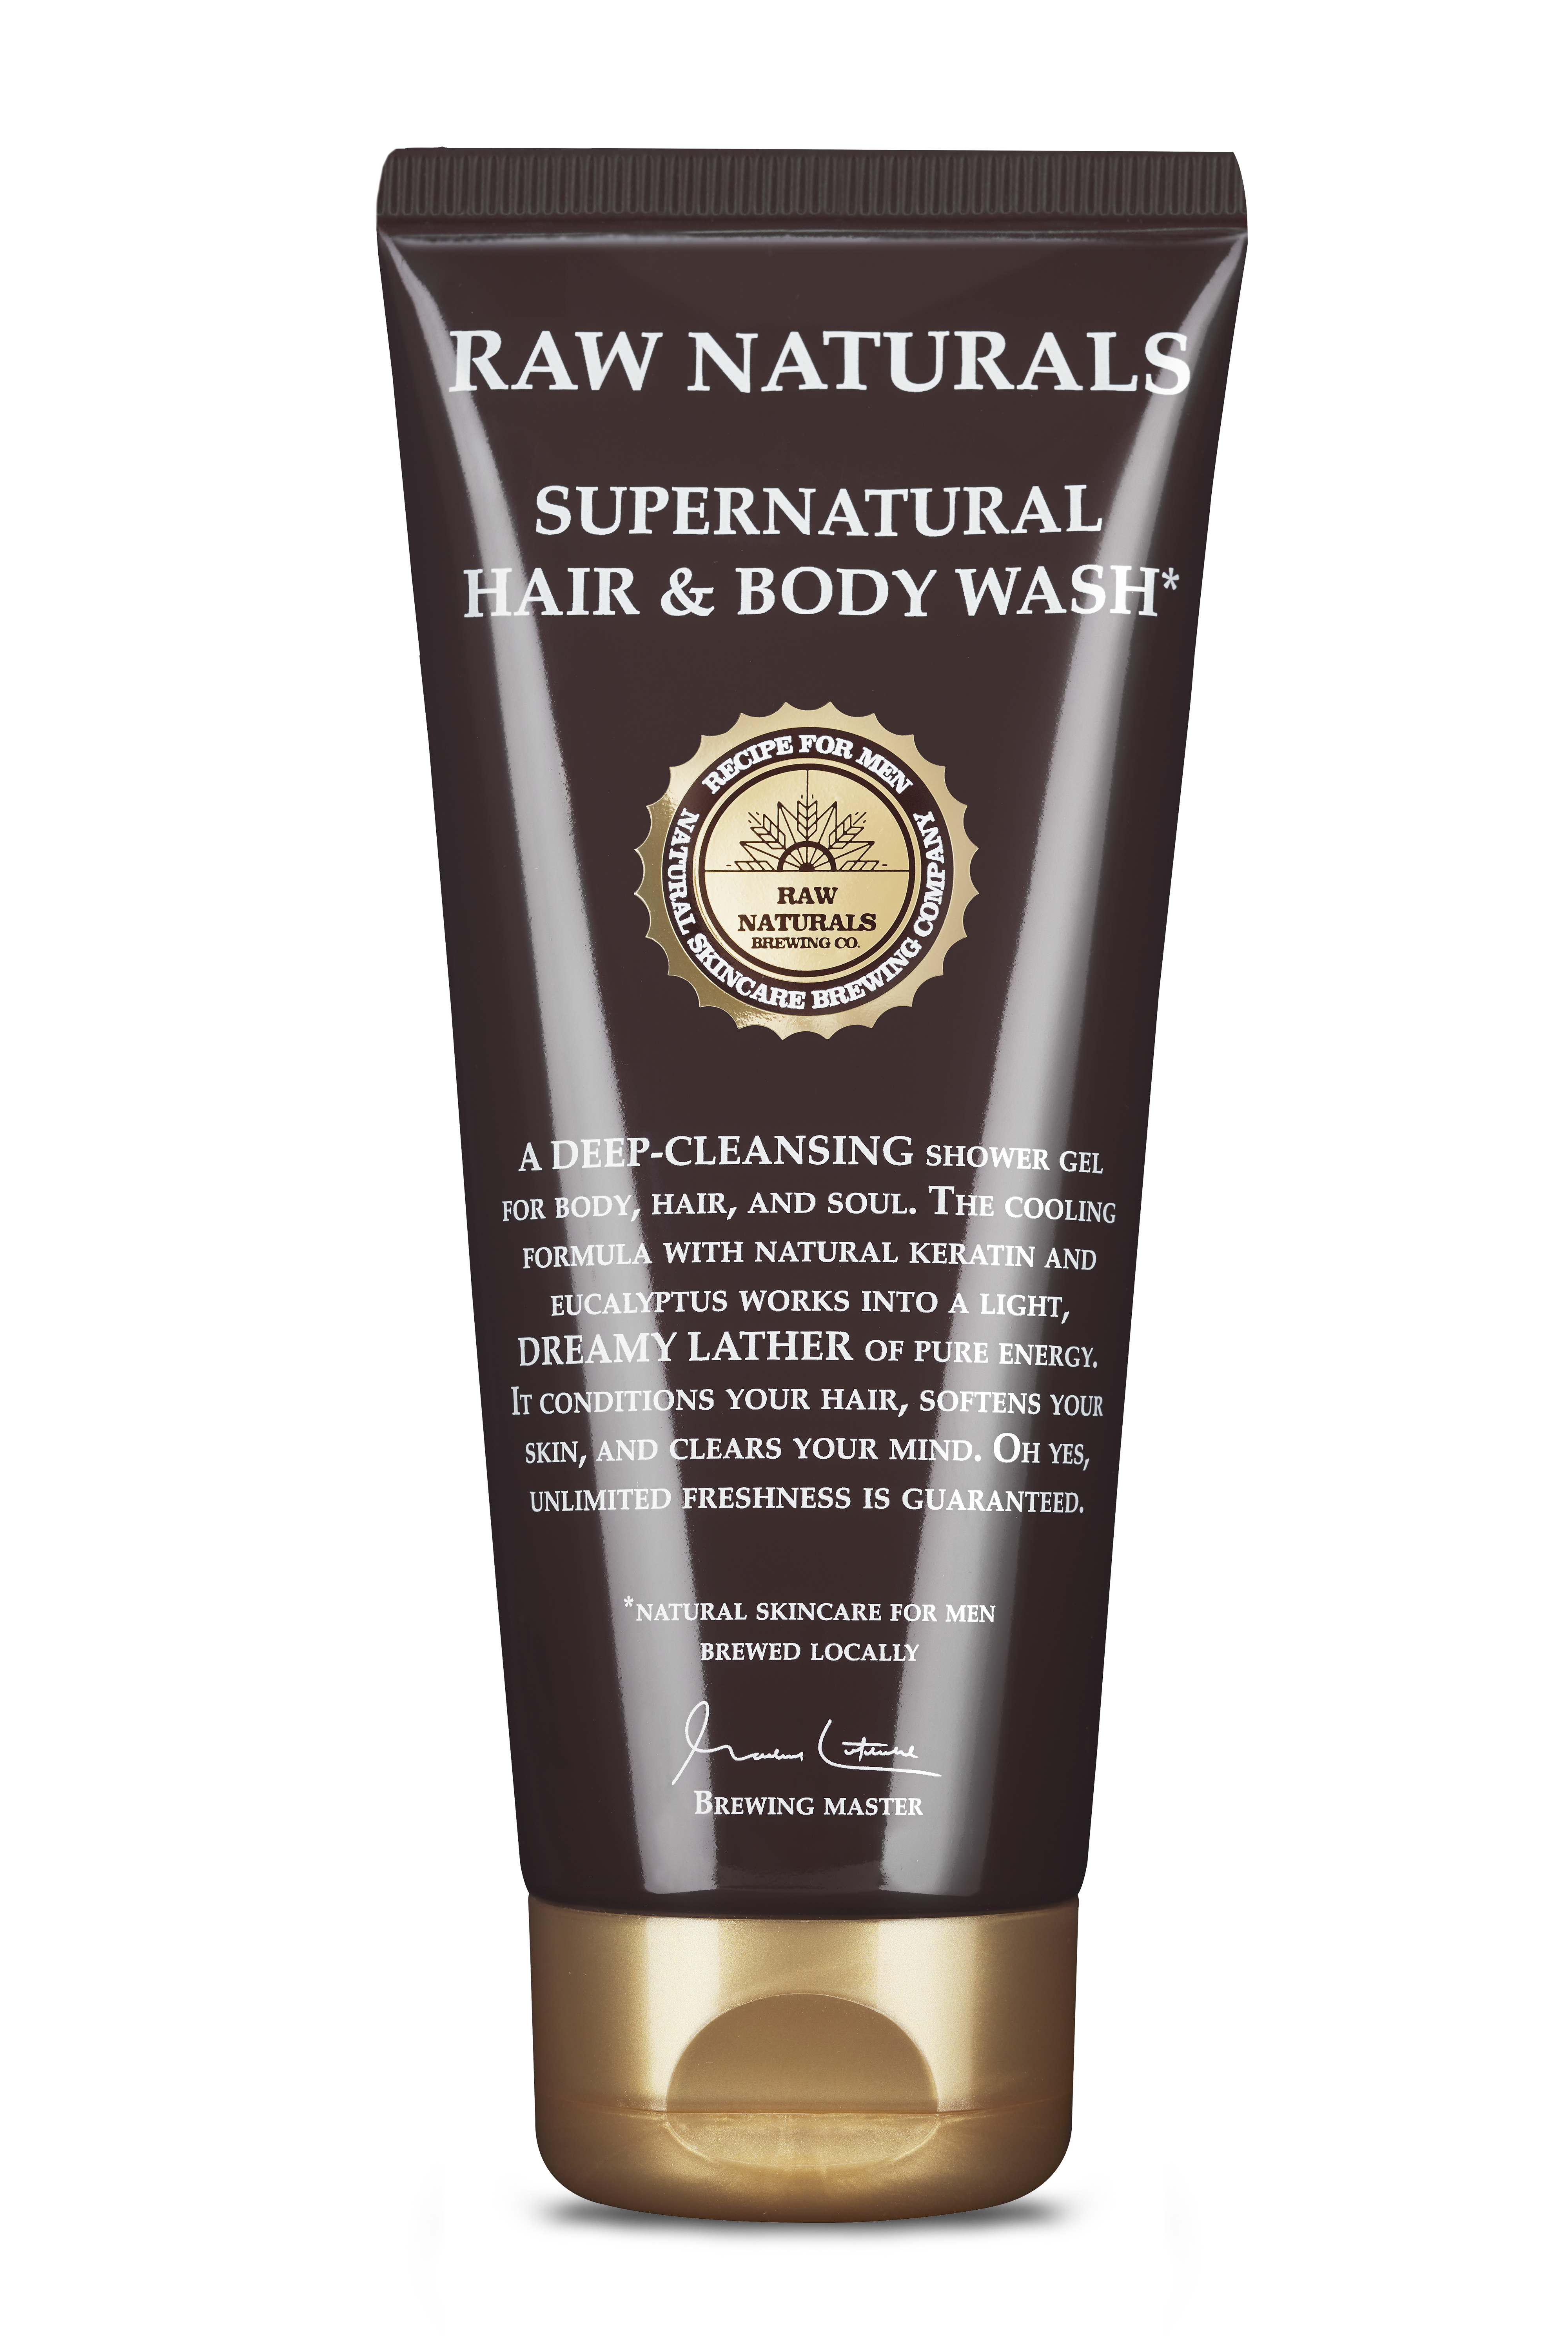  Supernatural Hair & Body Wash